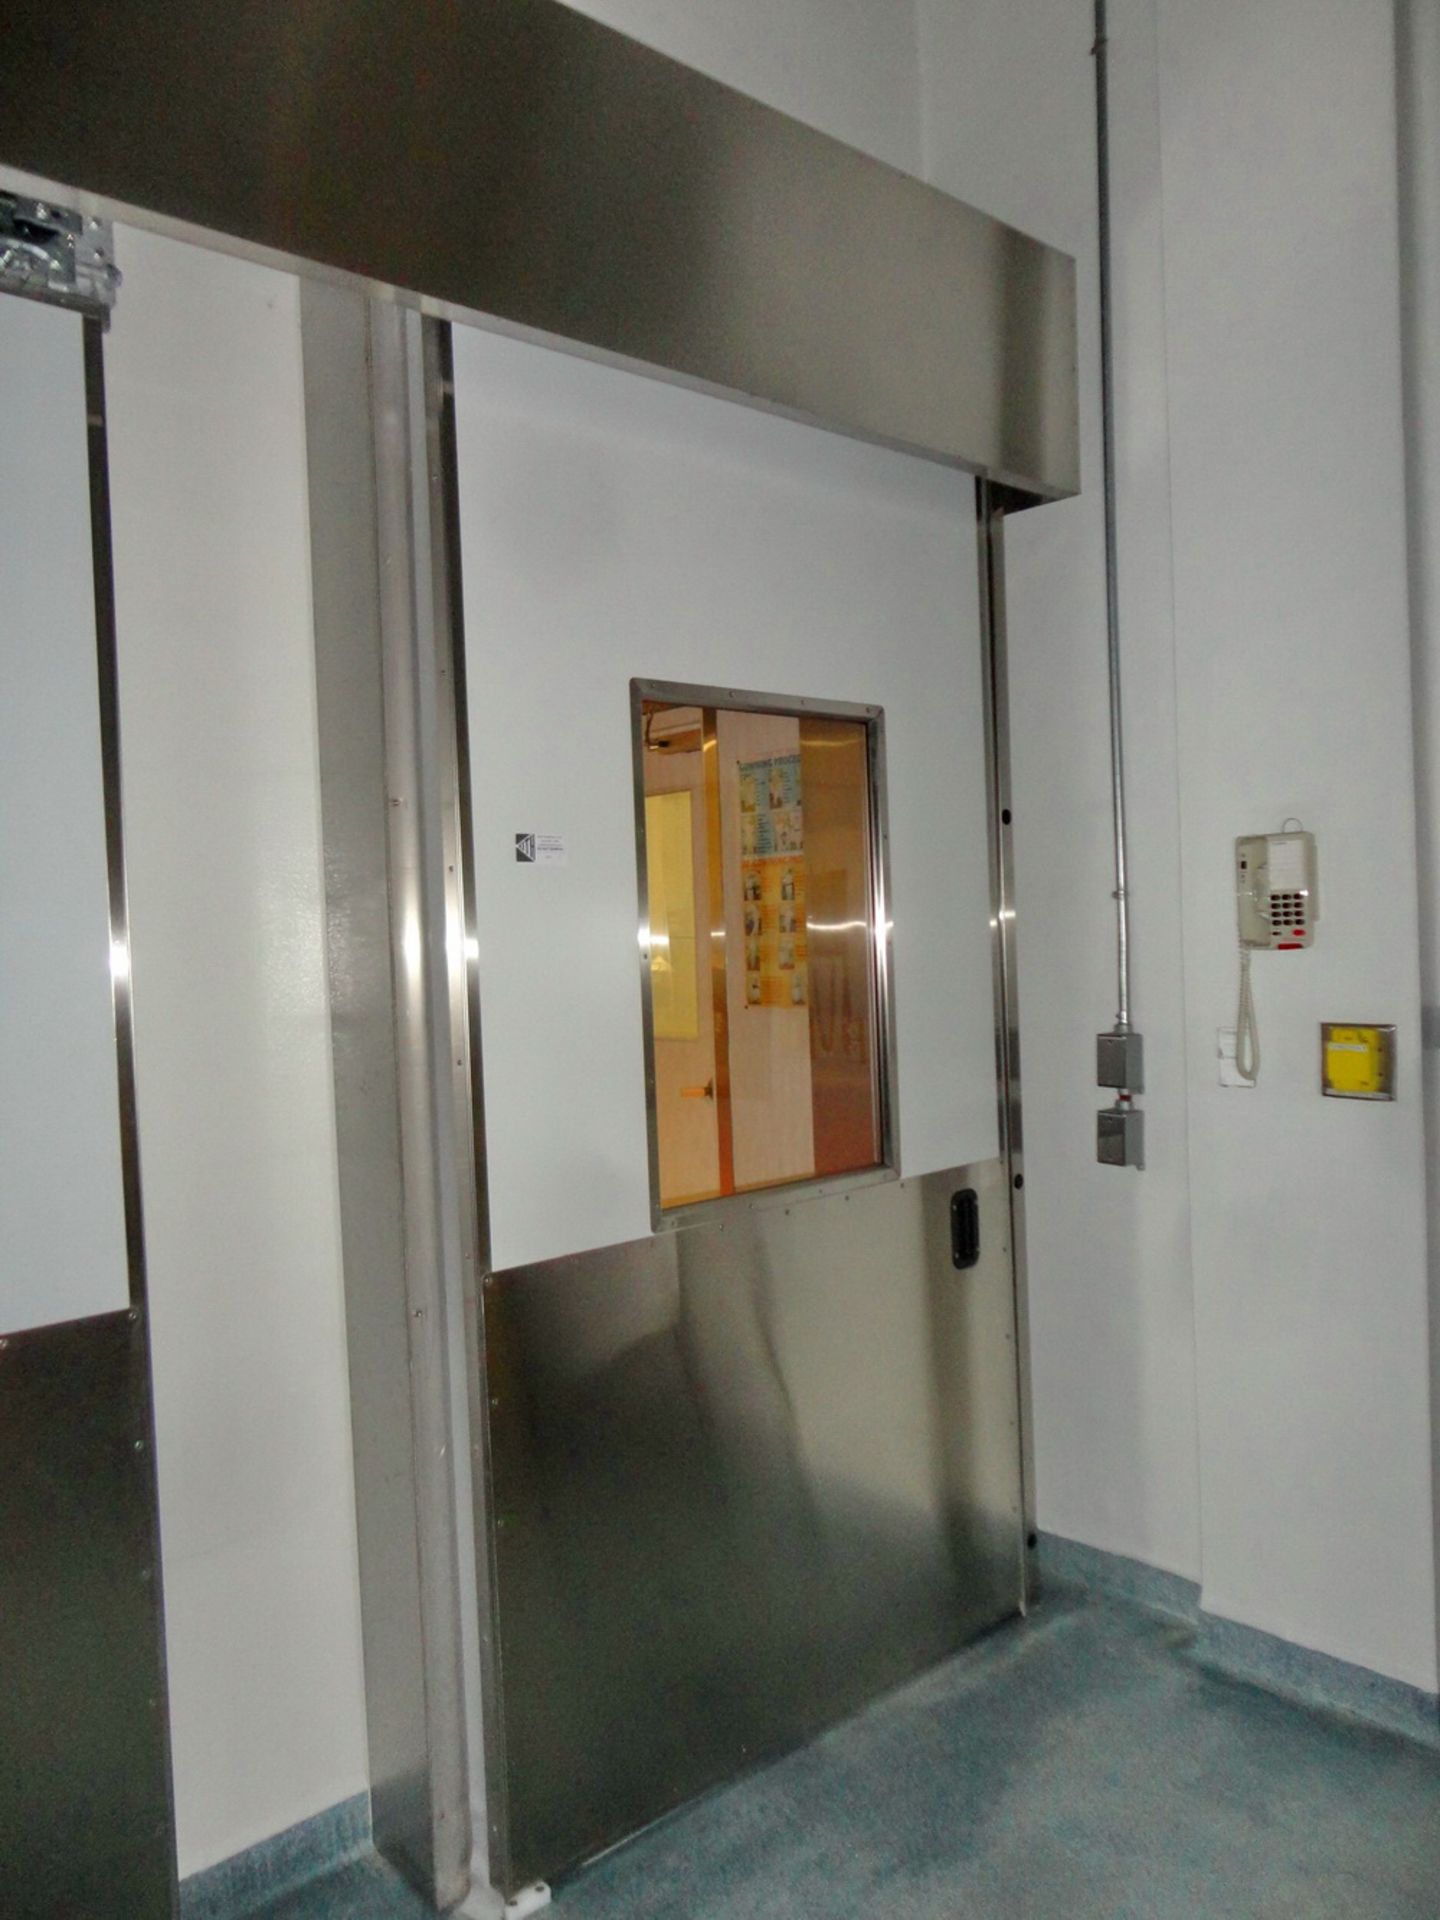 (1) Pharmaceutical Door, Automatic Horizontal Sliding Single Panel Type, 51" wide panel